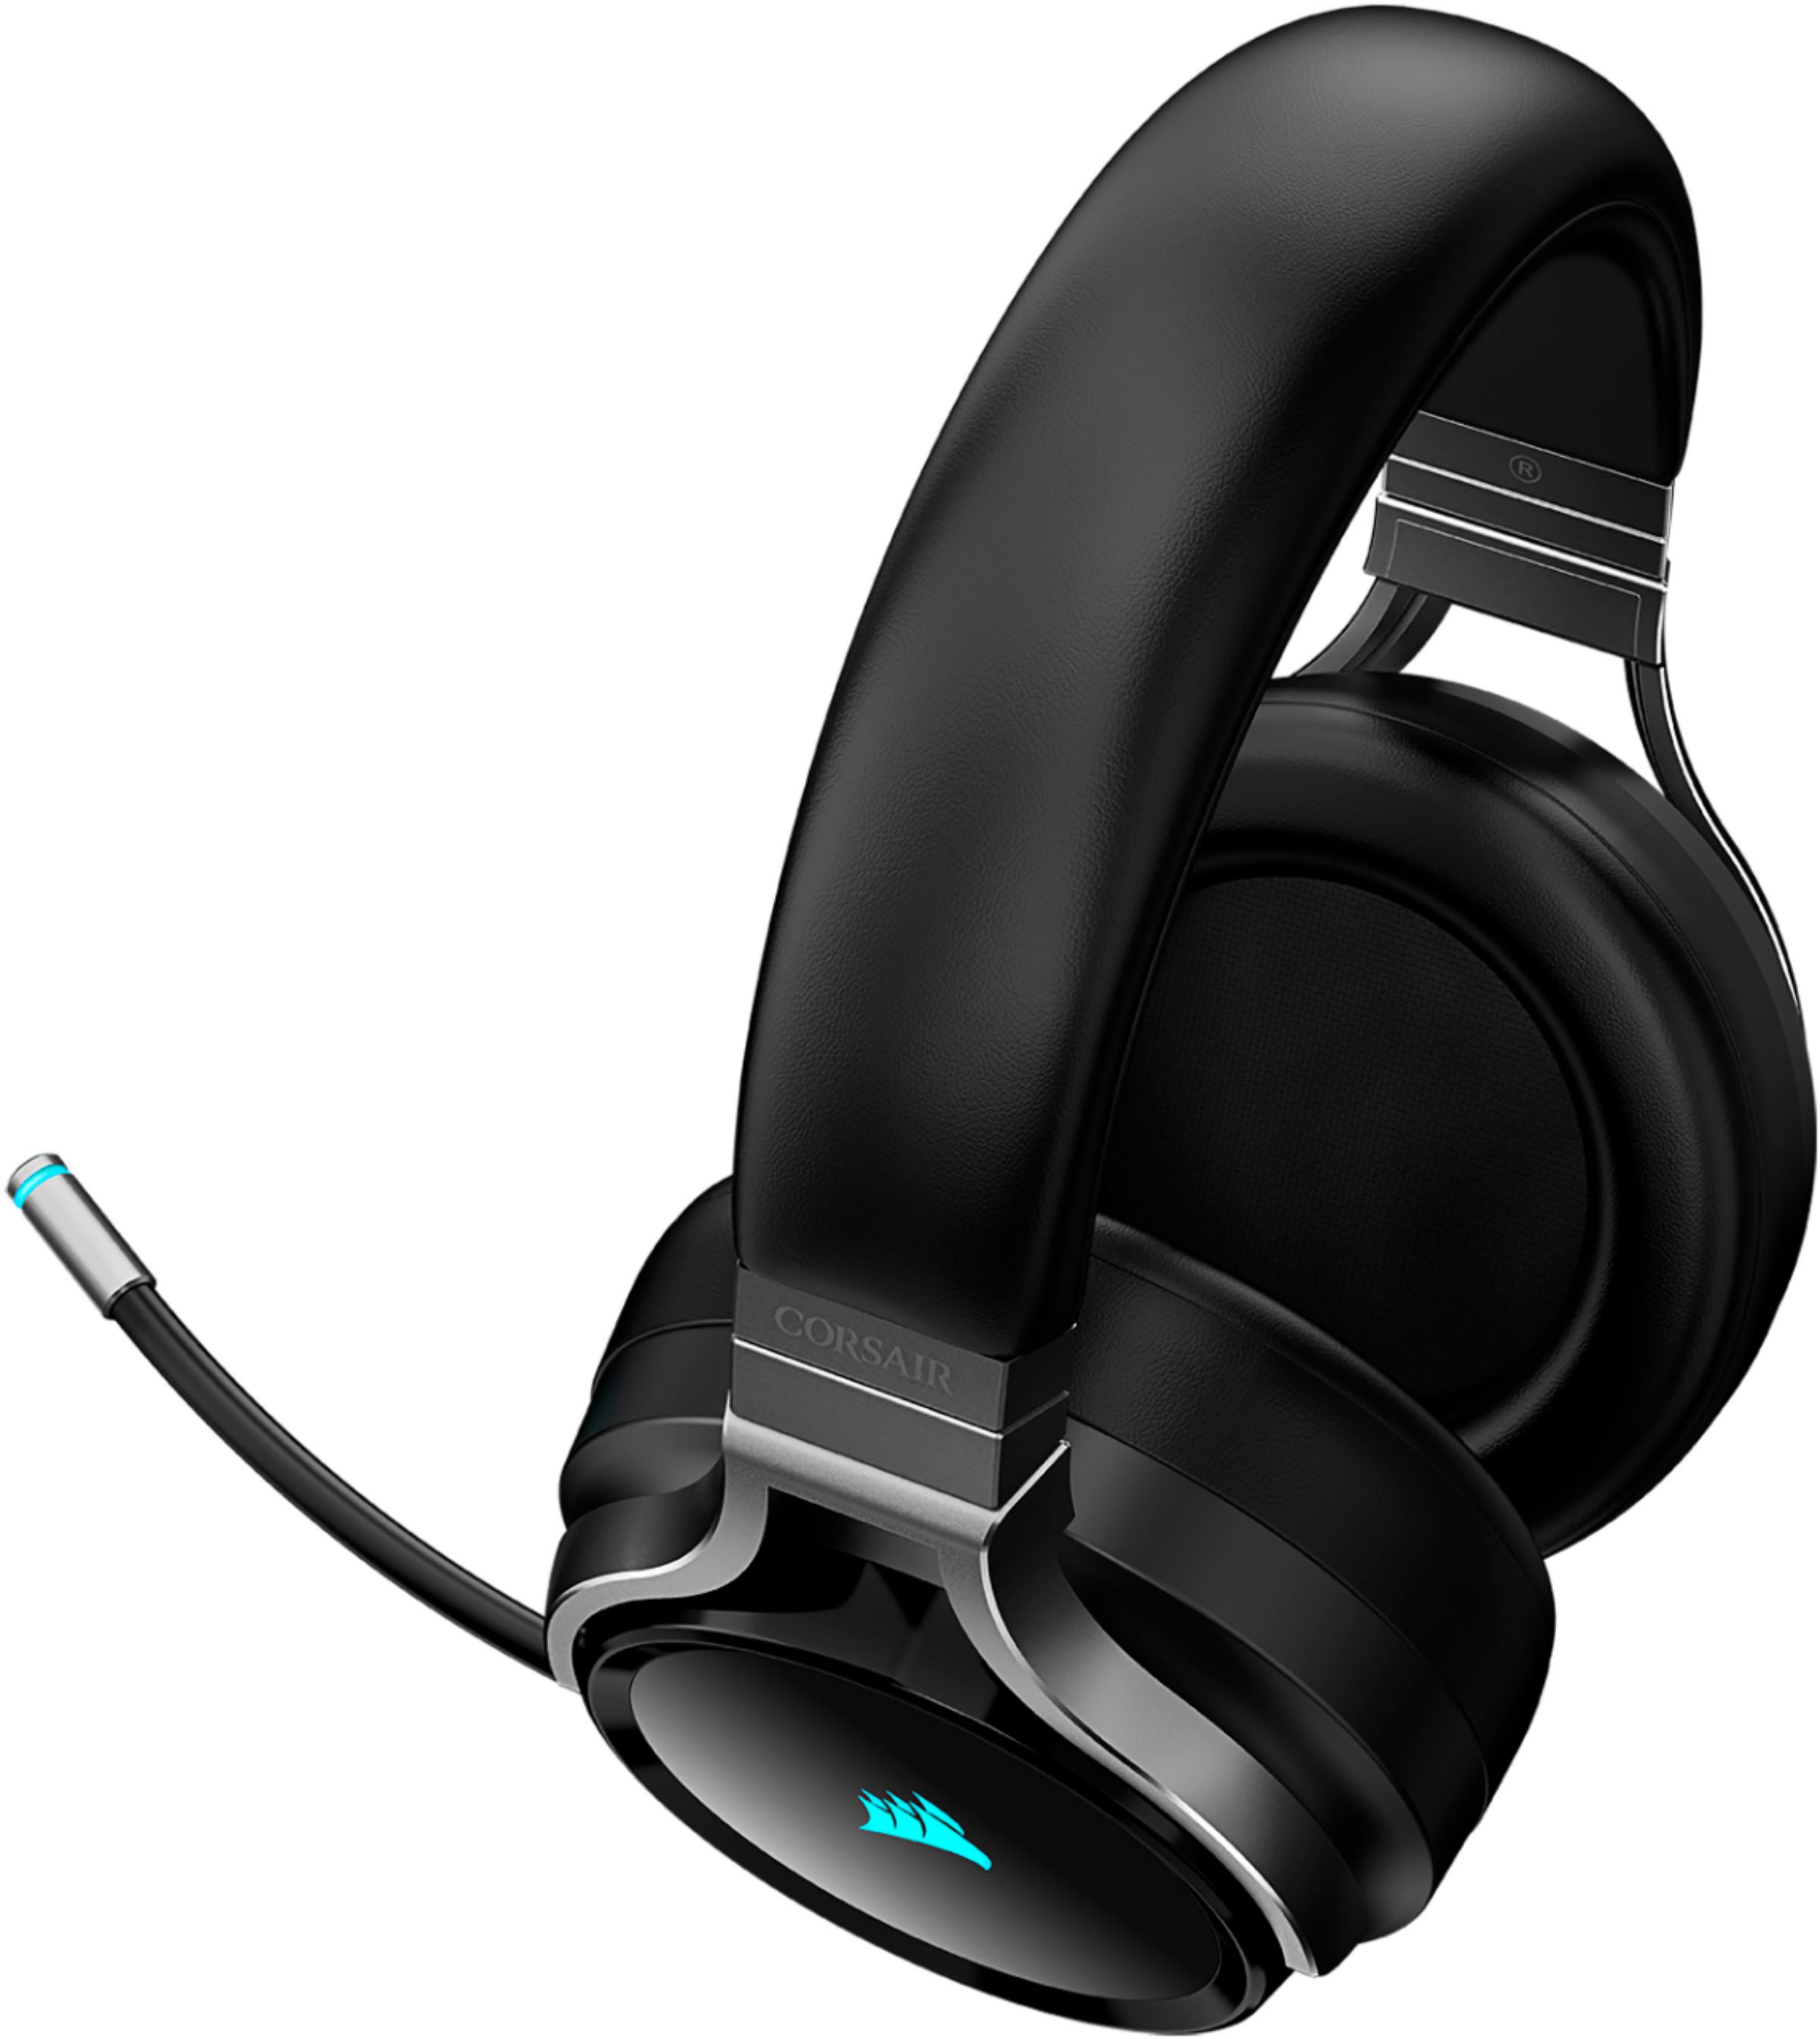 CORSAIR VIRTUOSO RGB Gaming Headset - HEADSET ONLY NO DONLGE NO MIC (WHITE)  843591019262